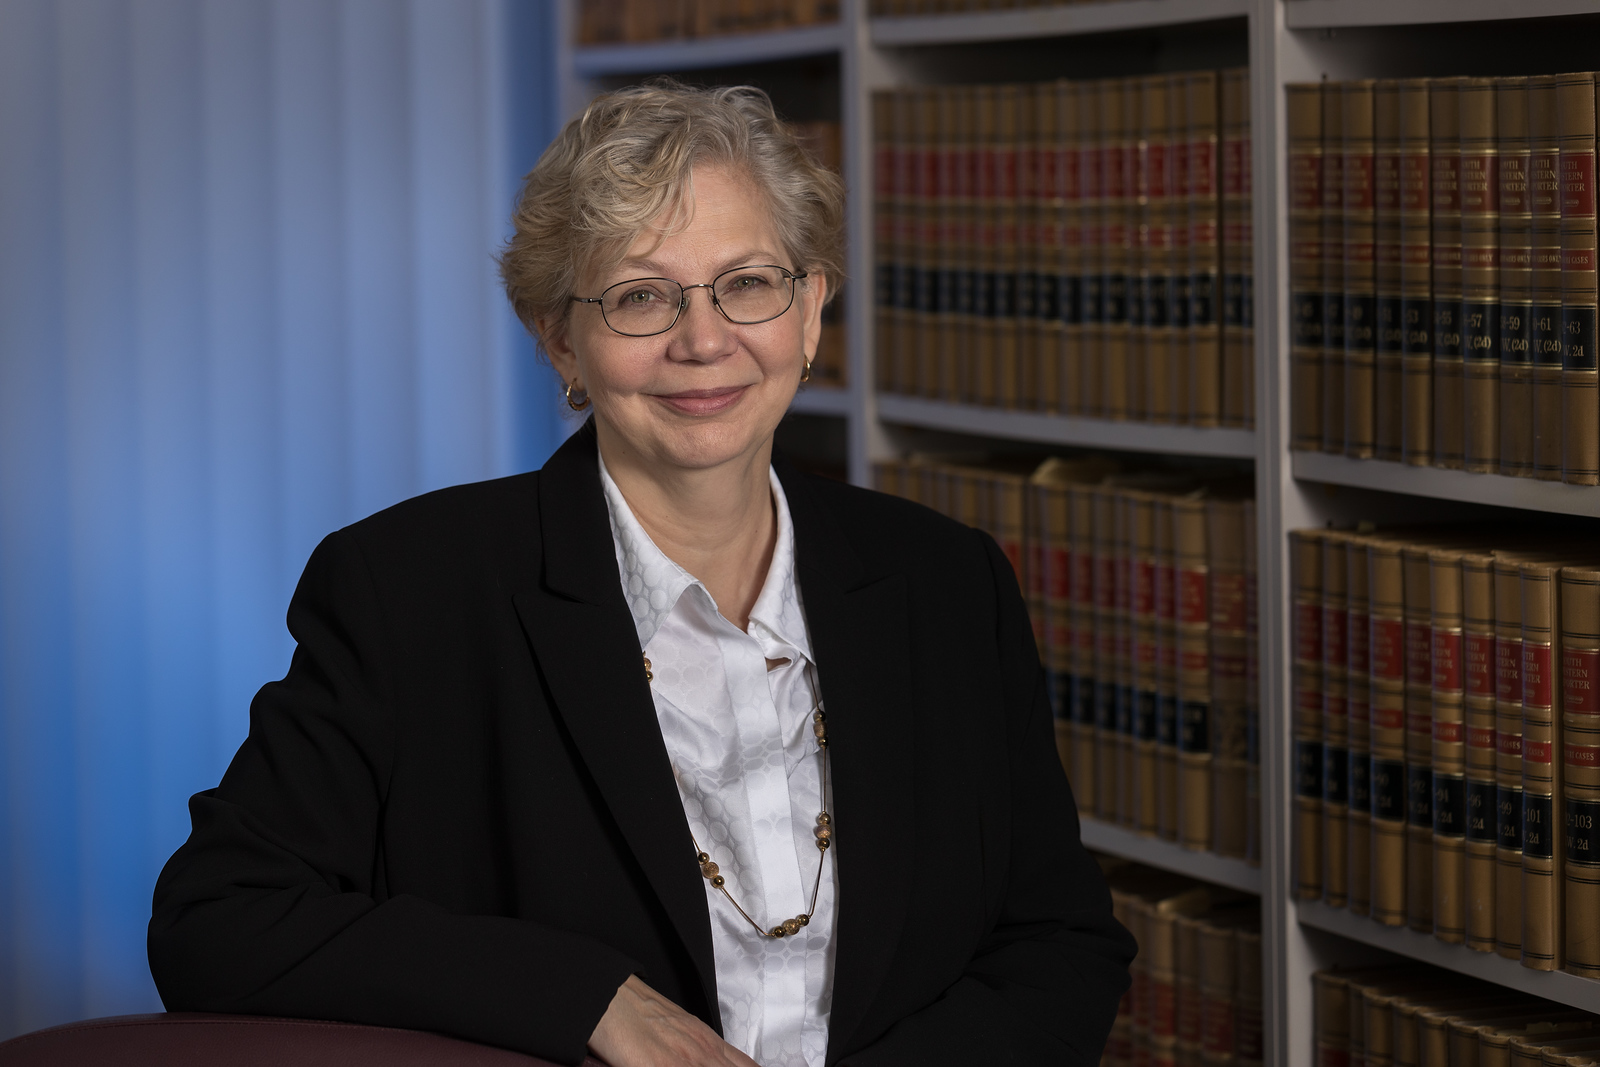 Springfield City Attorney Rhonda Lewsader